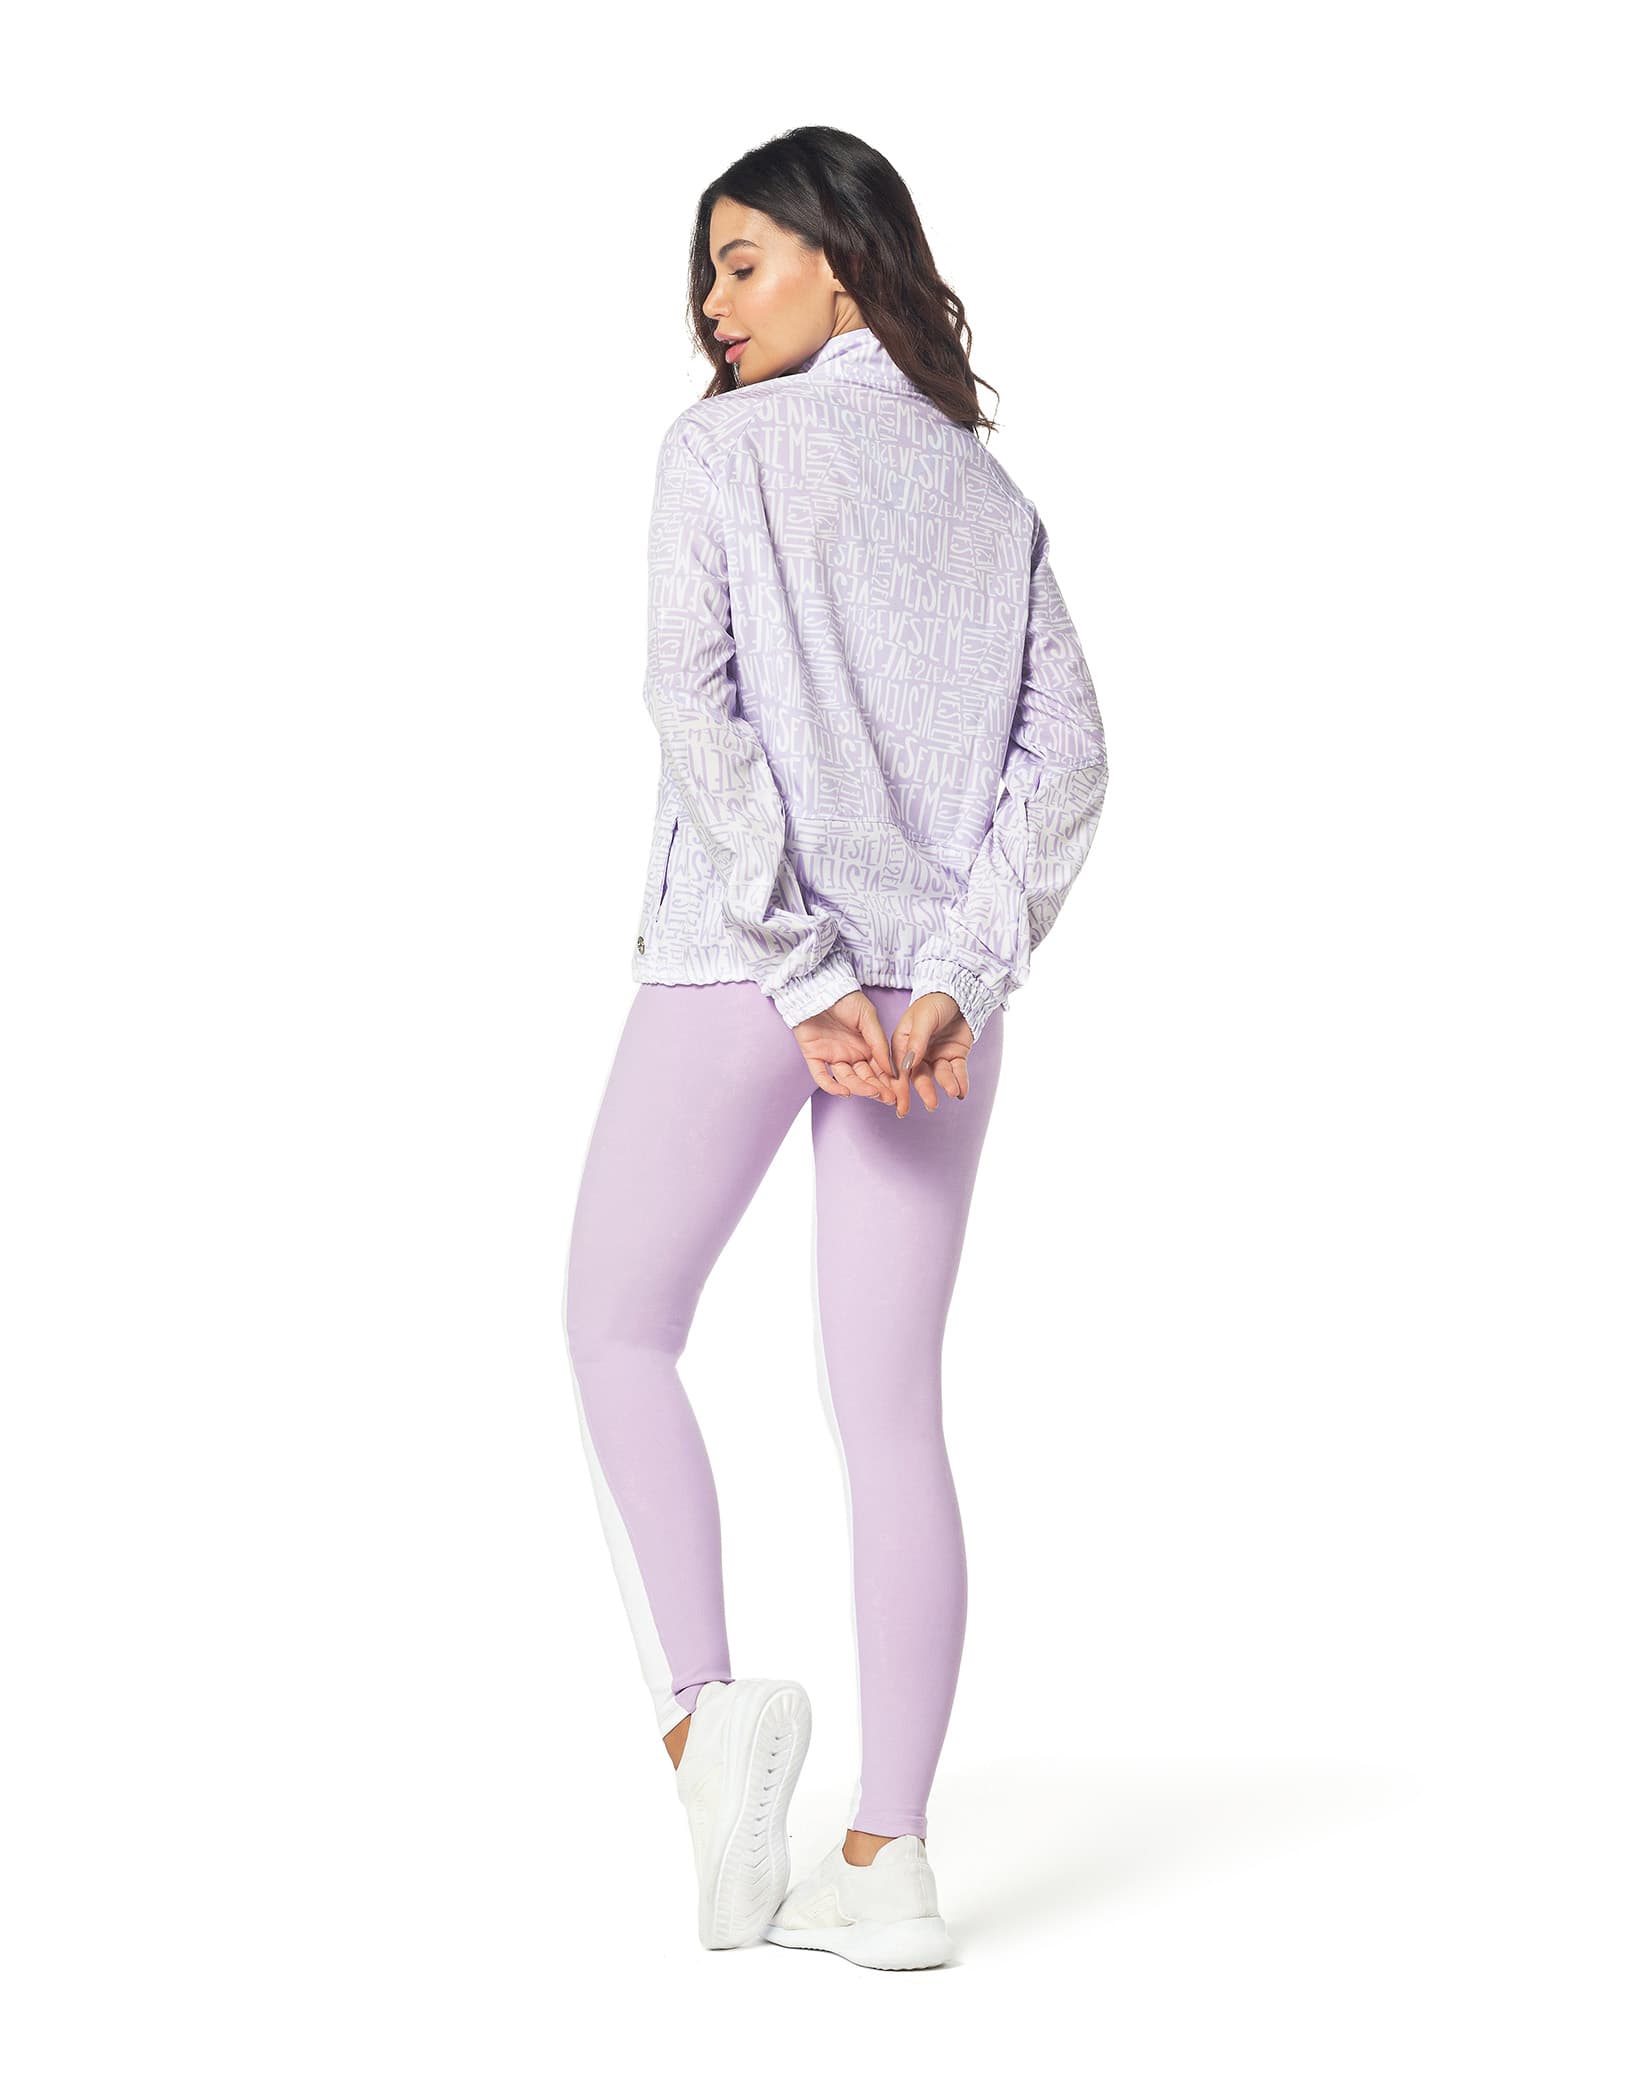 Vestem - Legging legging Yanna White/Lilac Lavender - FS1223C0347